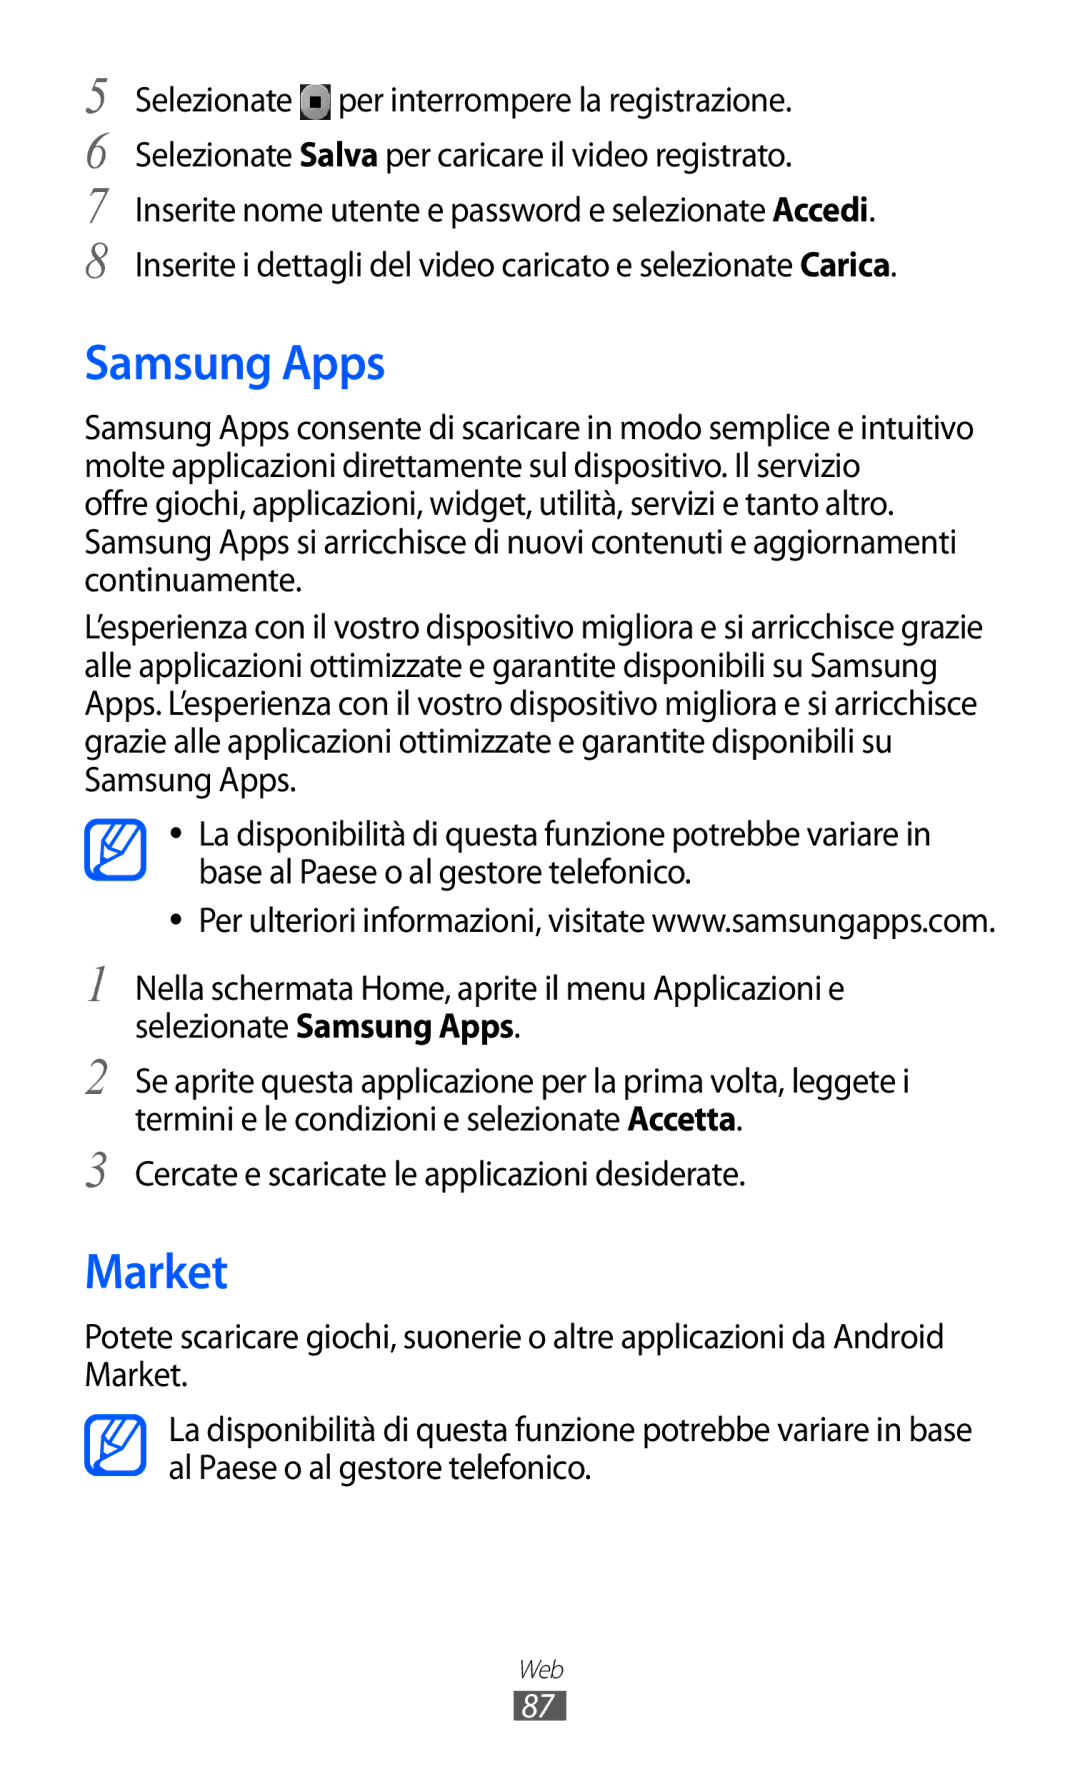 Samsung GT-B5510CAAWIN, GT-B5510CAAHUI, GT-B5510WSAWIN Samsung Apps, Market, Cercate e scaricate le applicazioni desiderate 